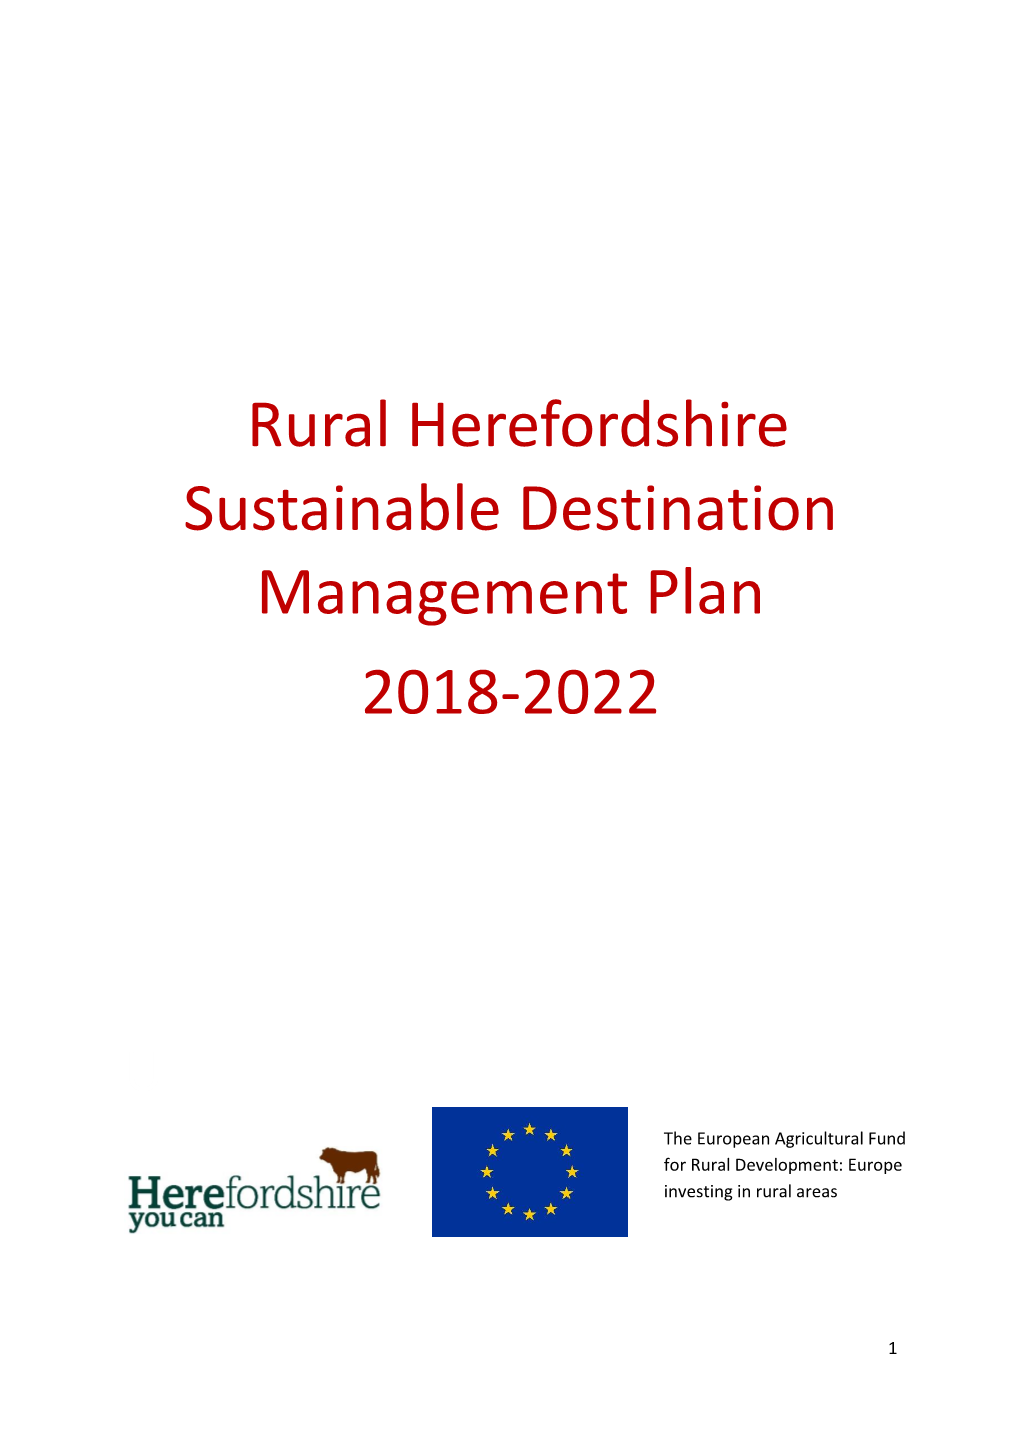 Rural Herefordshire Sustainable Destination Management Plan